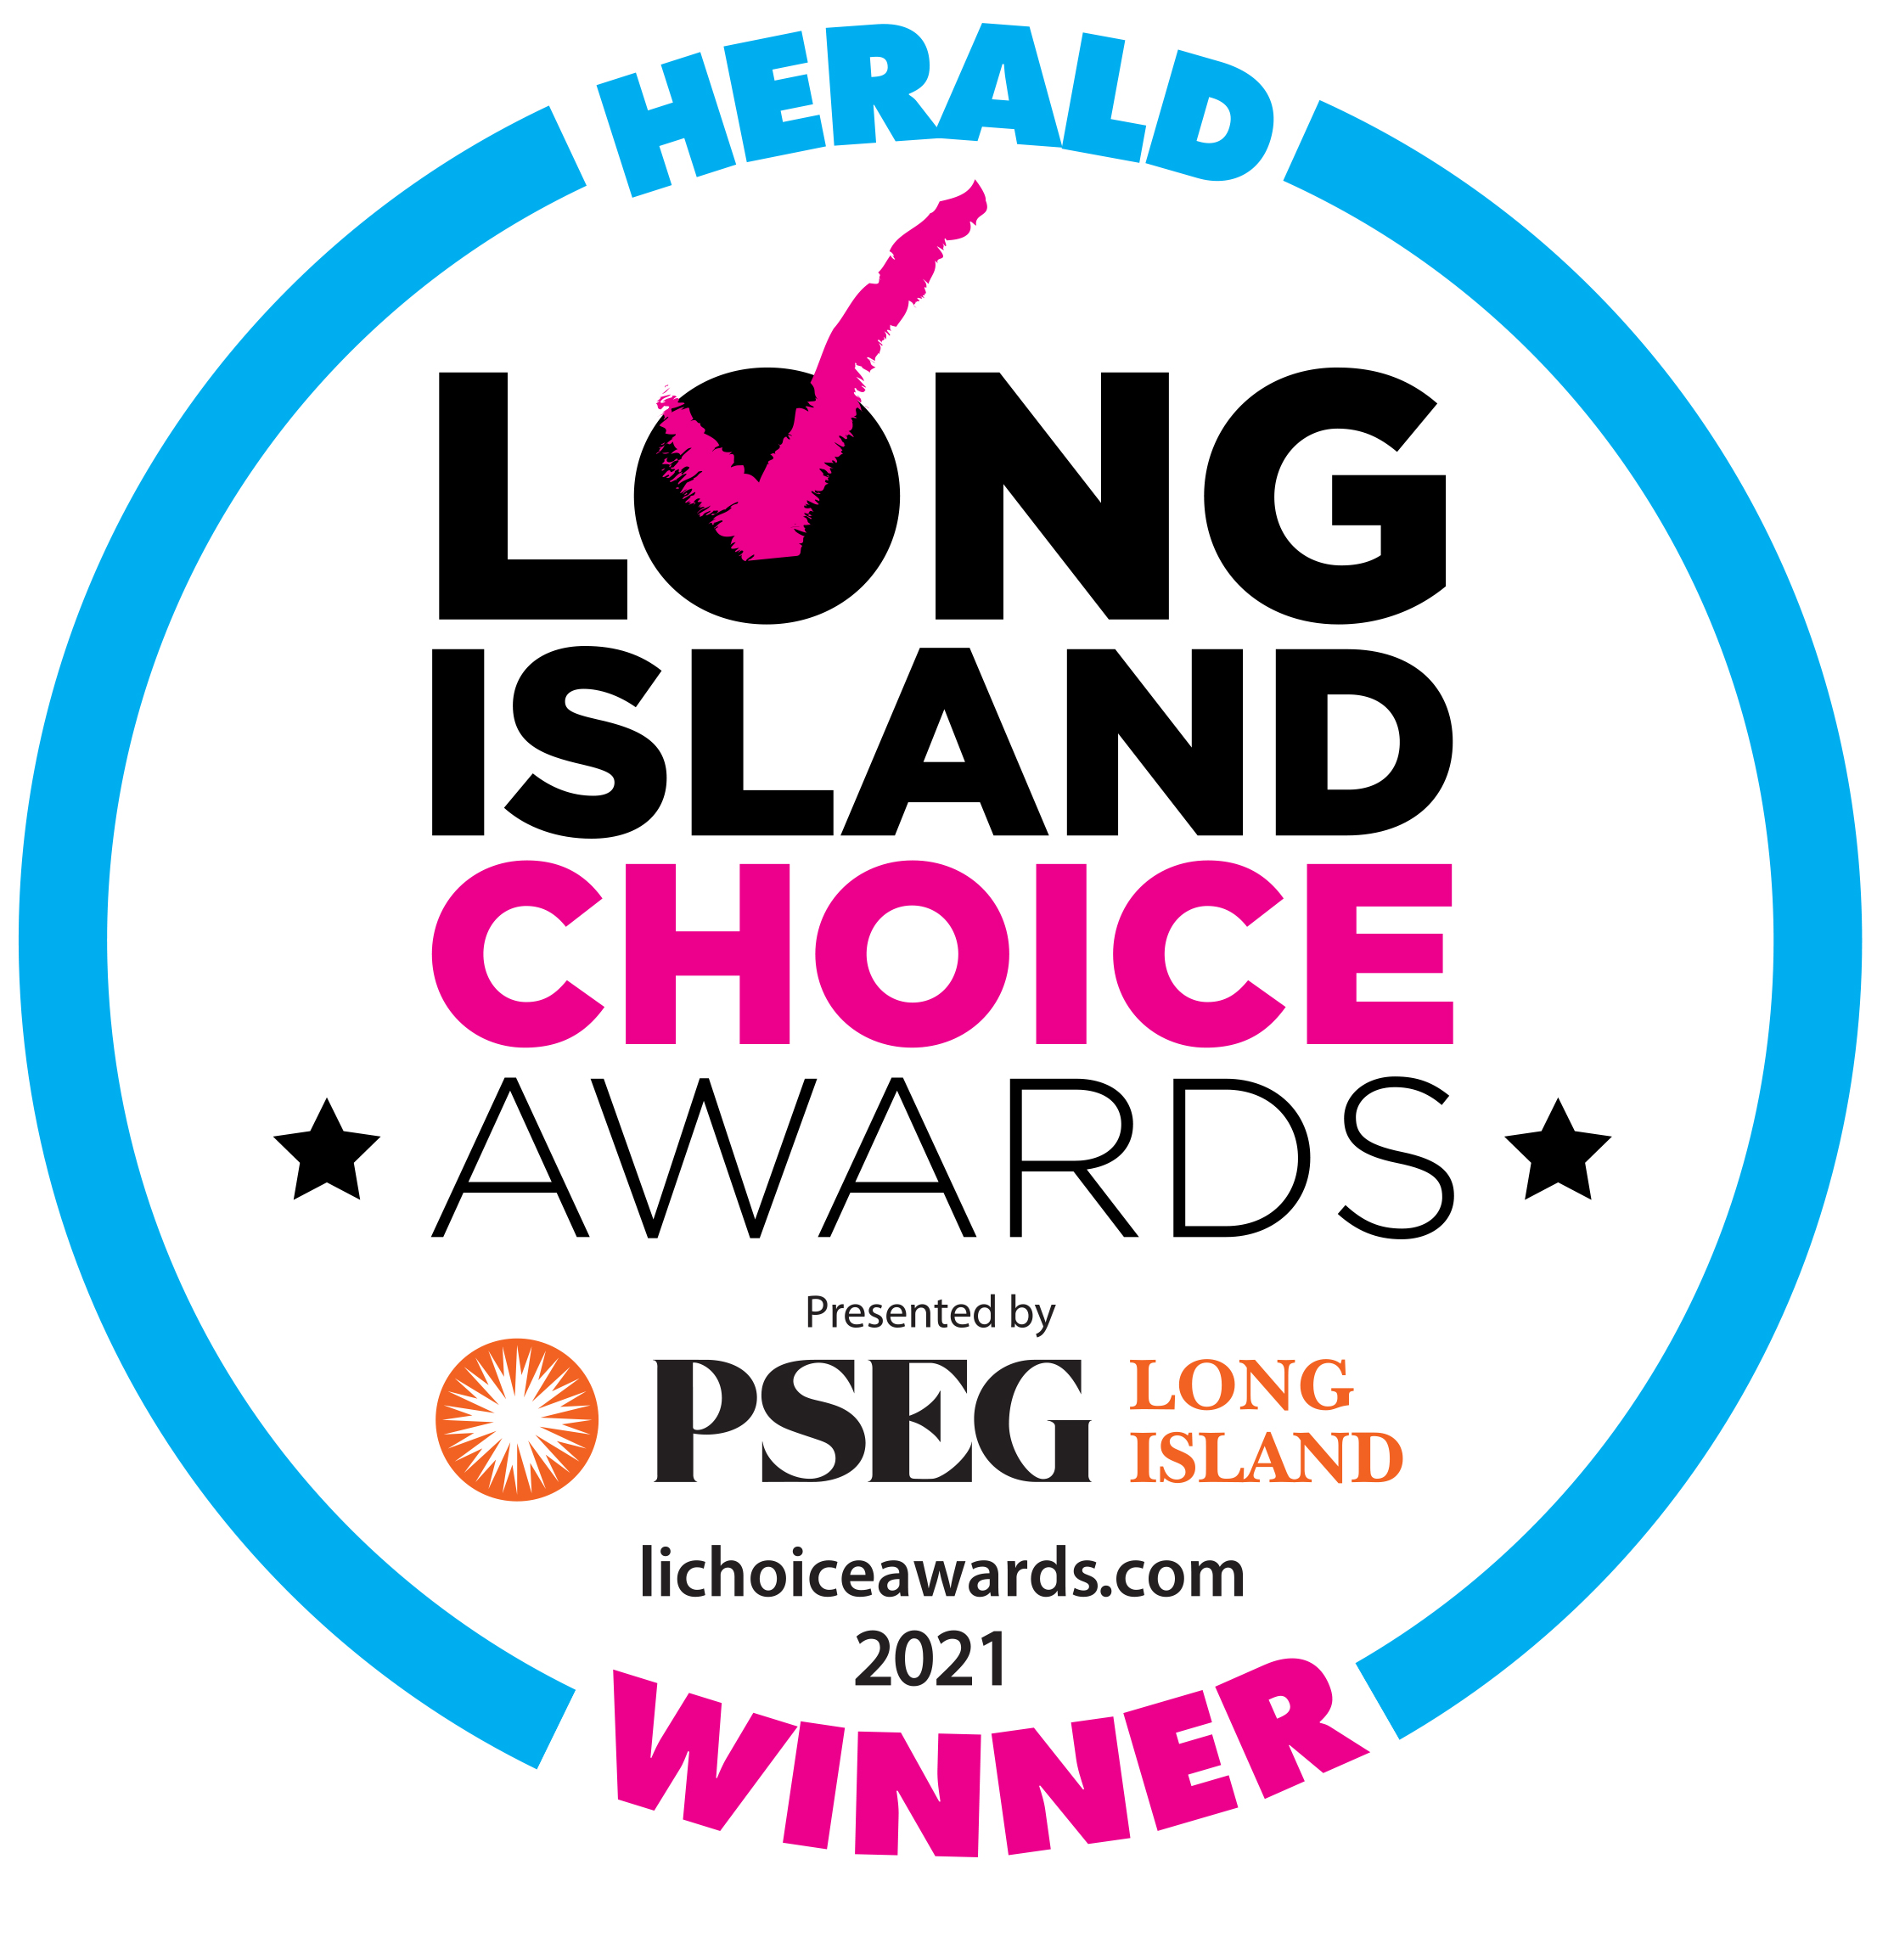 Long Island Choice Awards Winner 2021